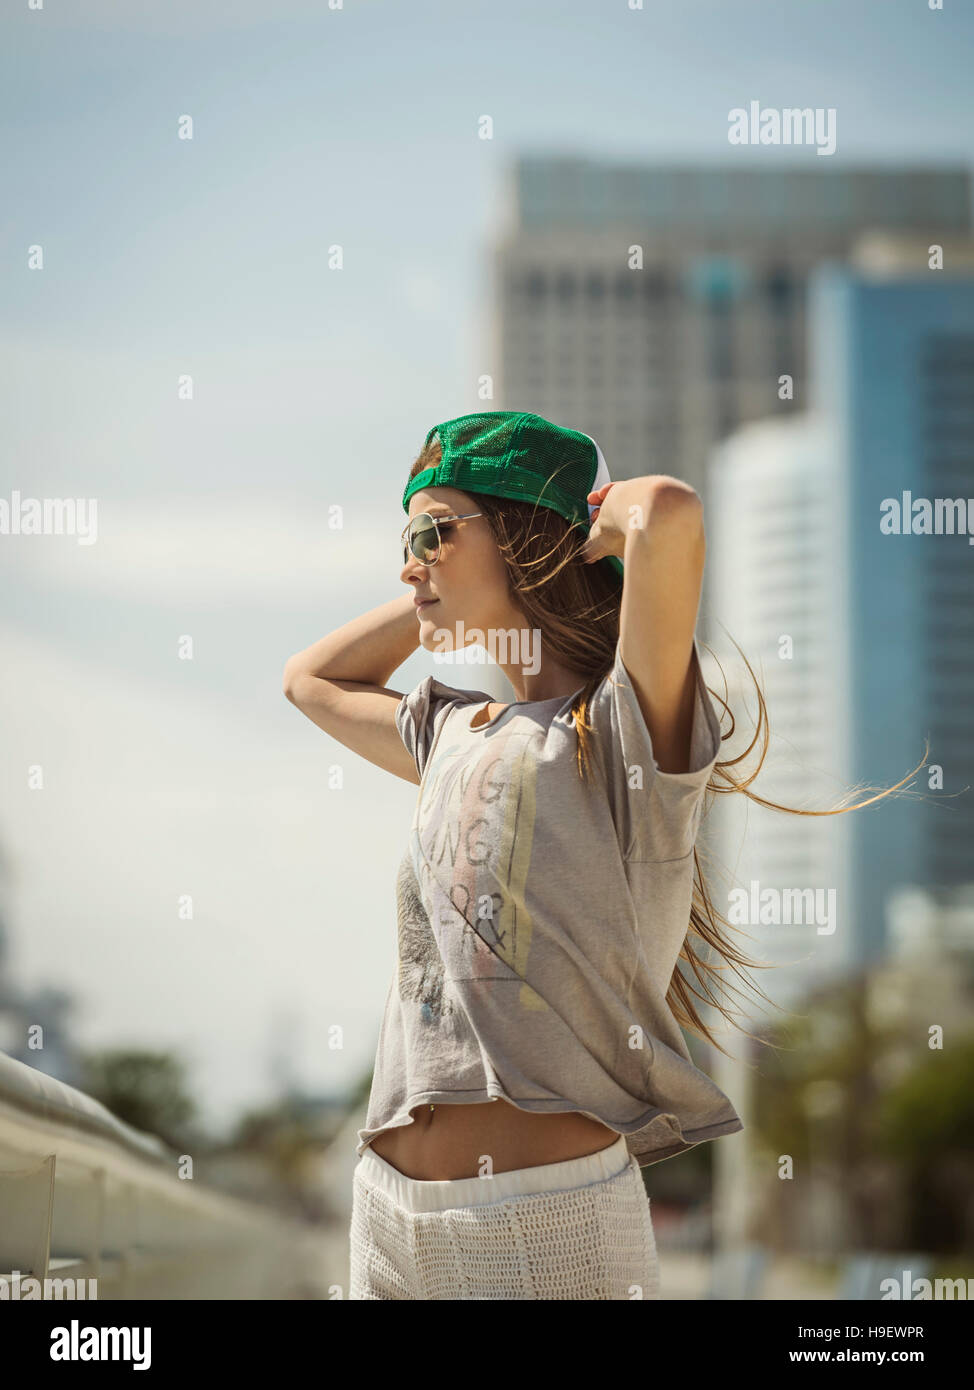 Caucasian woman wearing baseball cap and sunglasses in wind Stock Photo